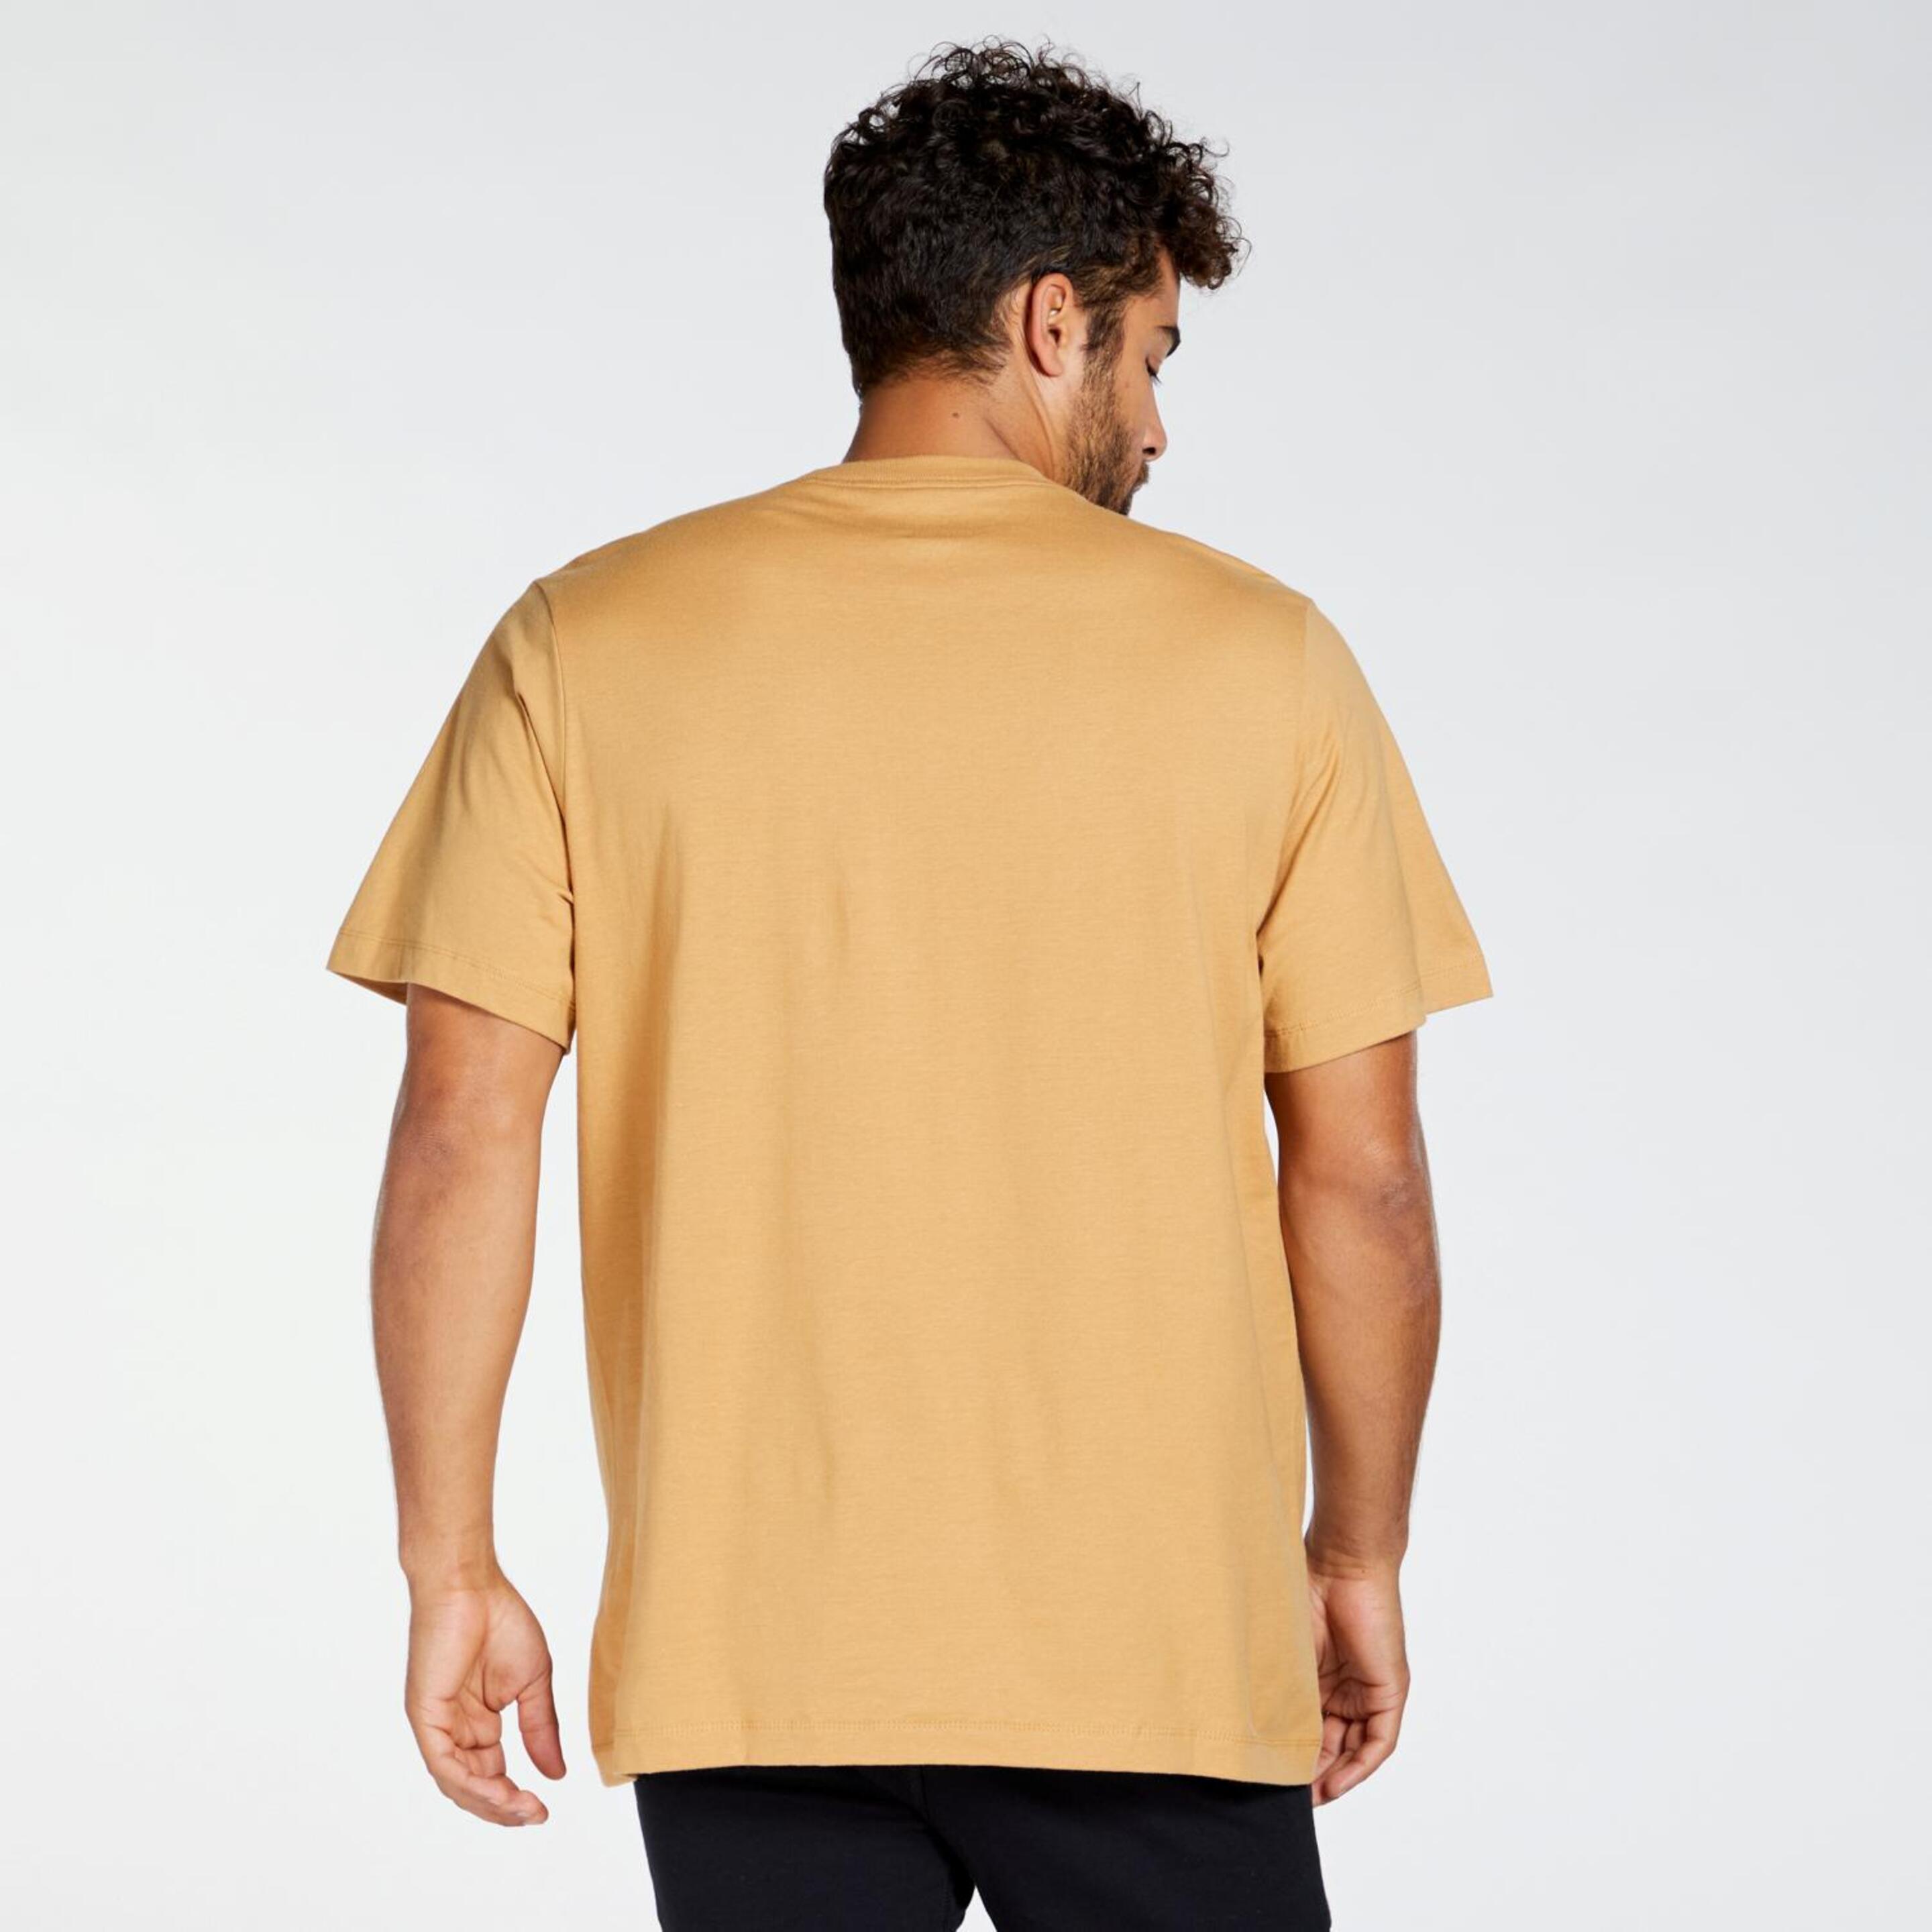 Nike Club - Ocre - Camiseta Oversize Hombre